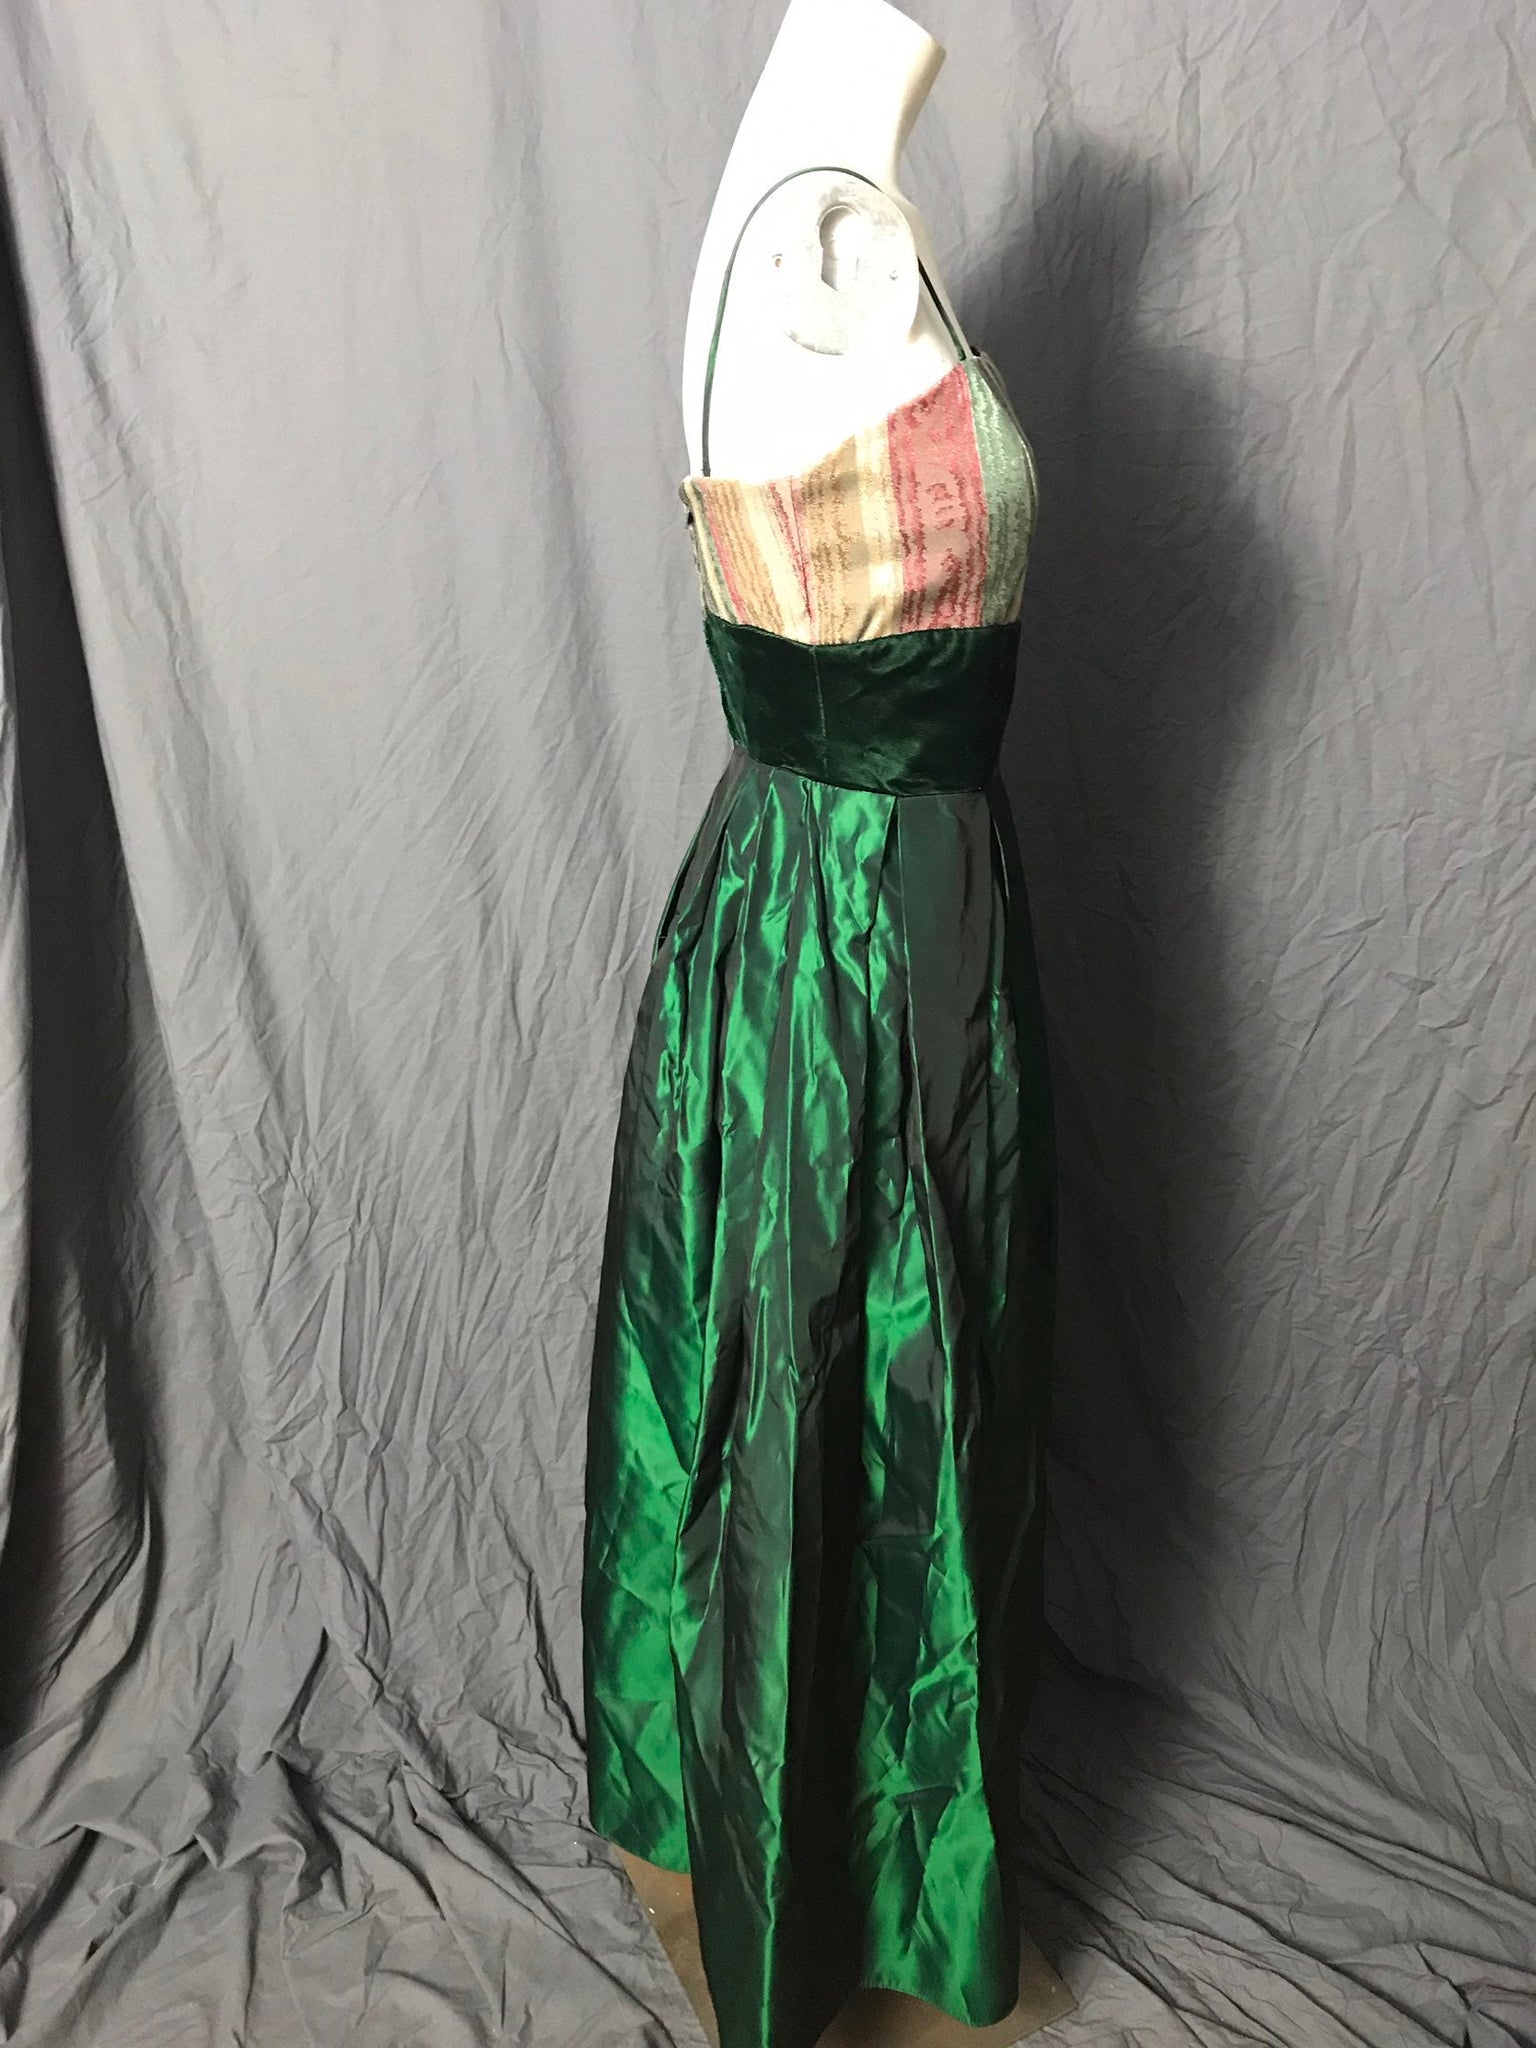 Vintage 1960’s 70’s brocade long taffeta party dress S